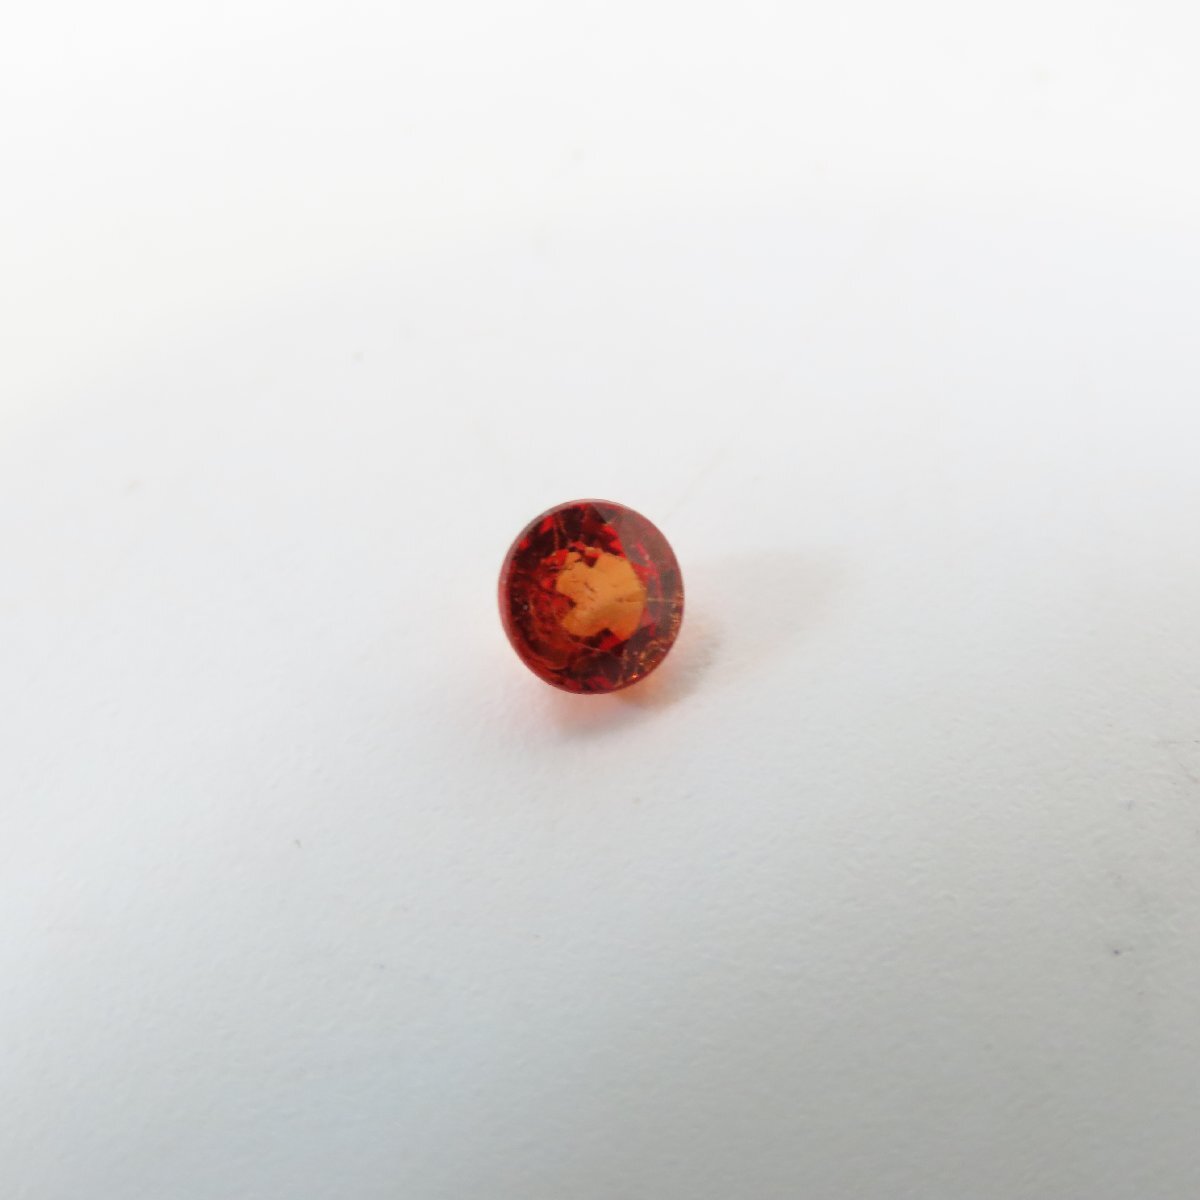 ER-60 天然コランダム サファイア ルース 裸石 1粒 0.428ct 透明赤橙色 中央宝石研究所 宝石鑑別書付_画像8